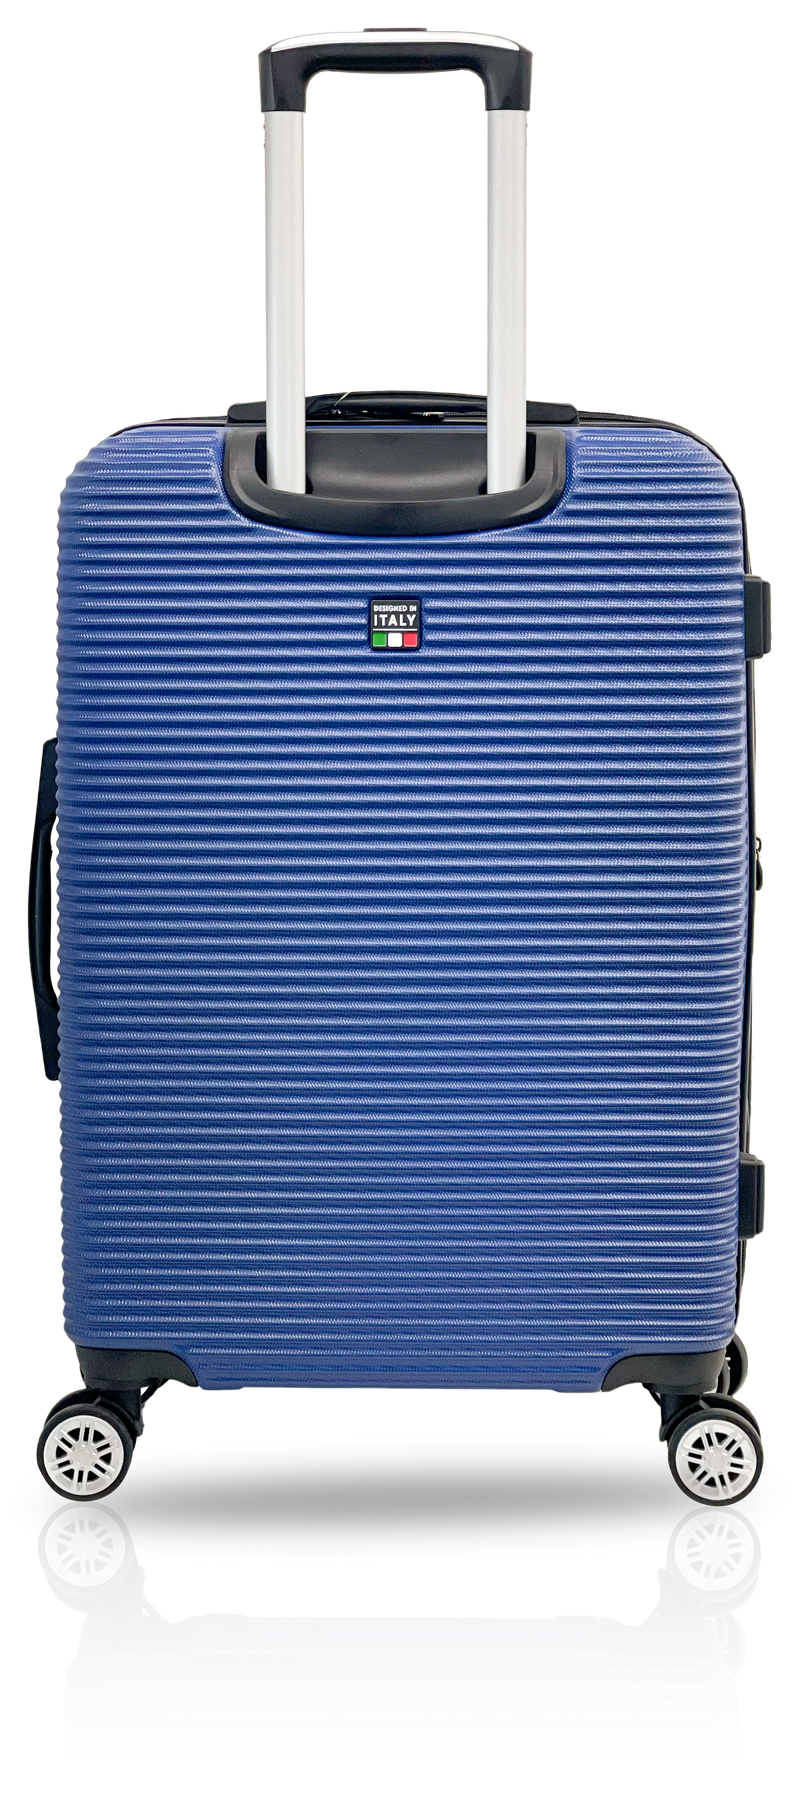 TUCCI Italy SCOPERTA ABS 28" Large Luggage Suitcase